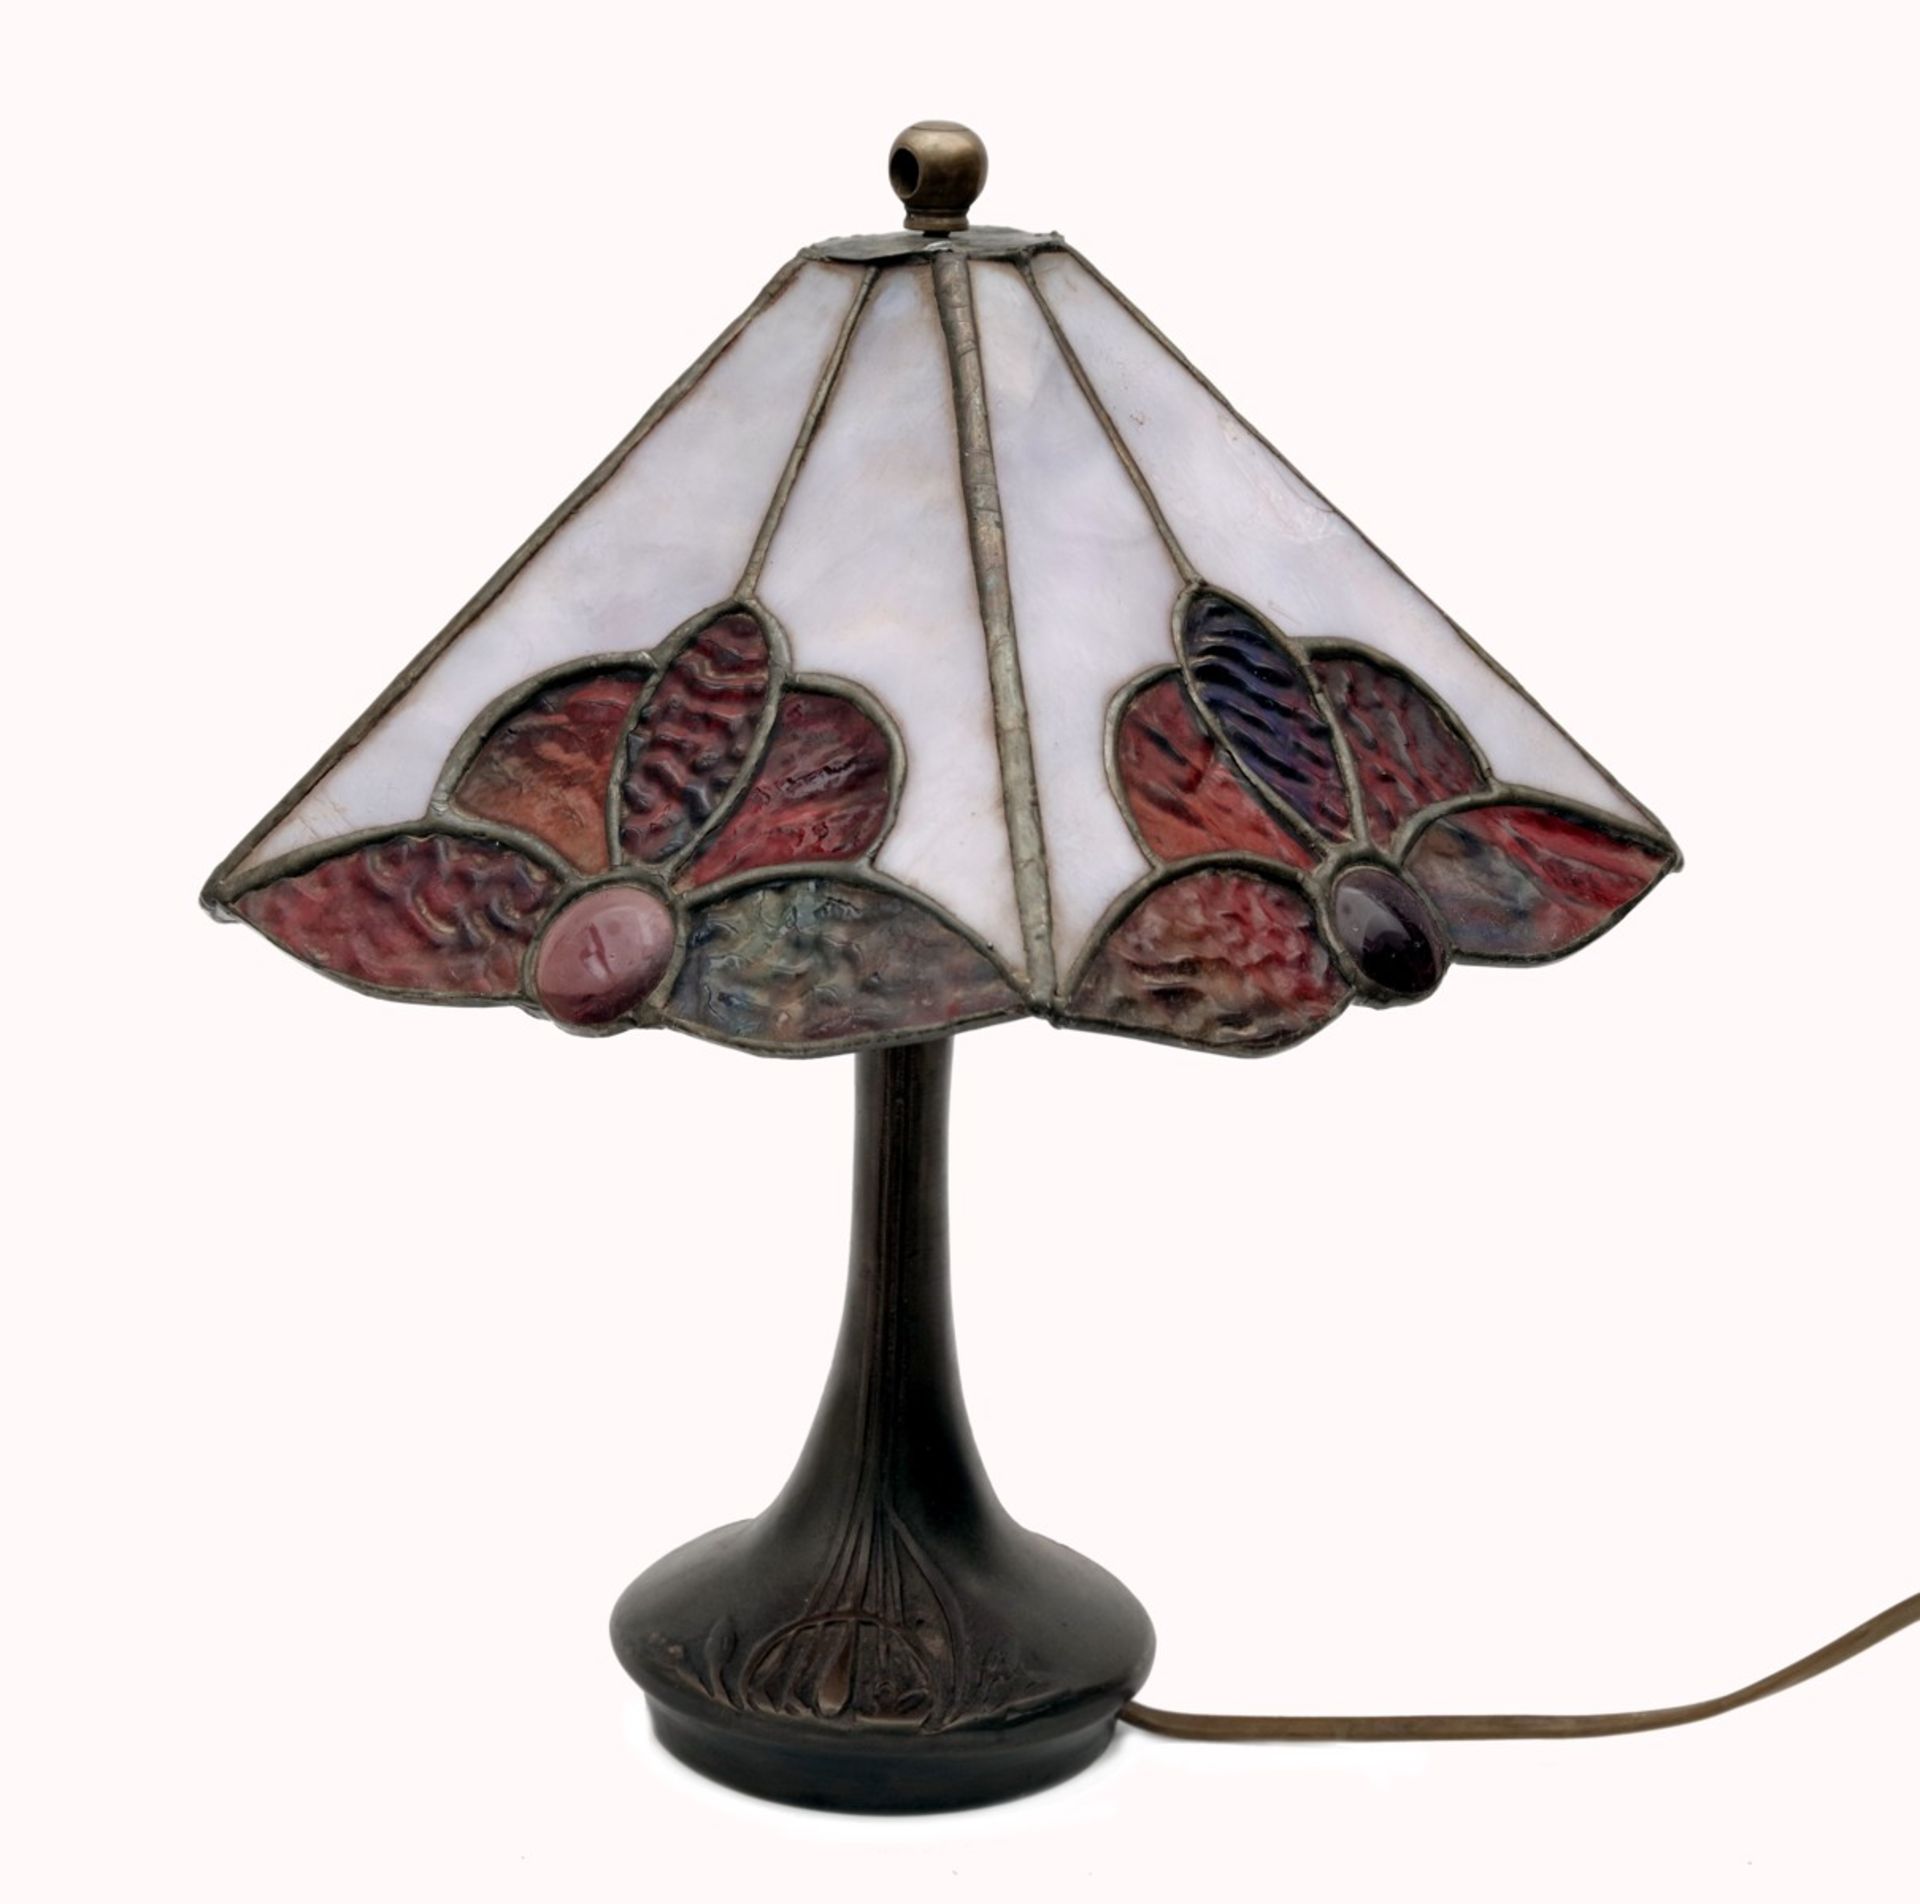 A Tiffany Style Lamp - Art Nouveau